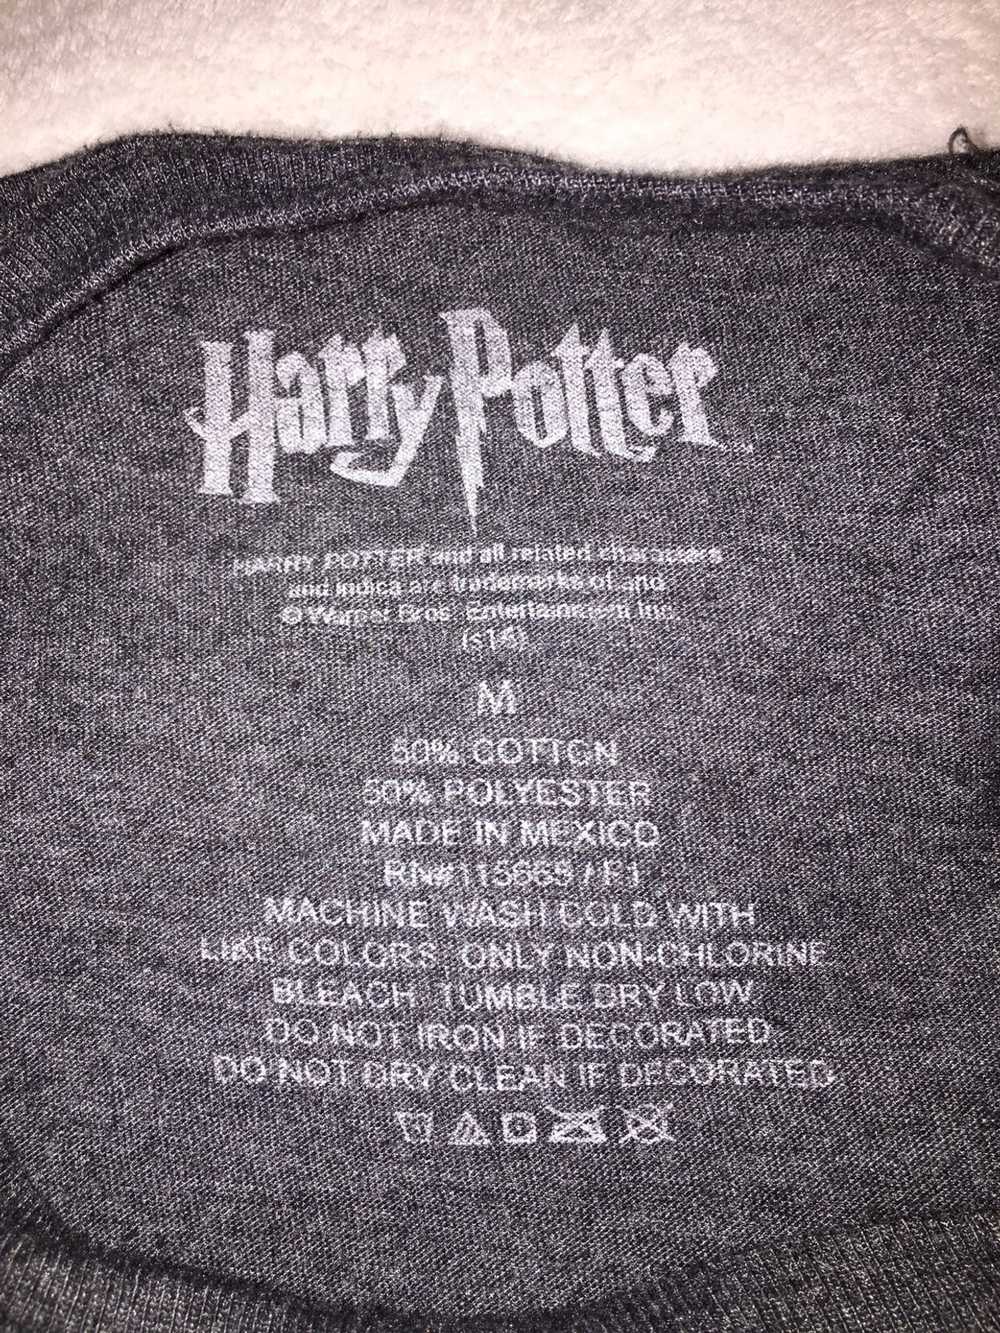 Streetwear Harry Potter x Hogwarts Graphic Tee - image 3